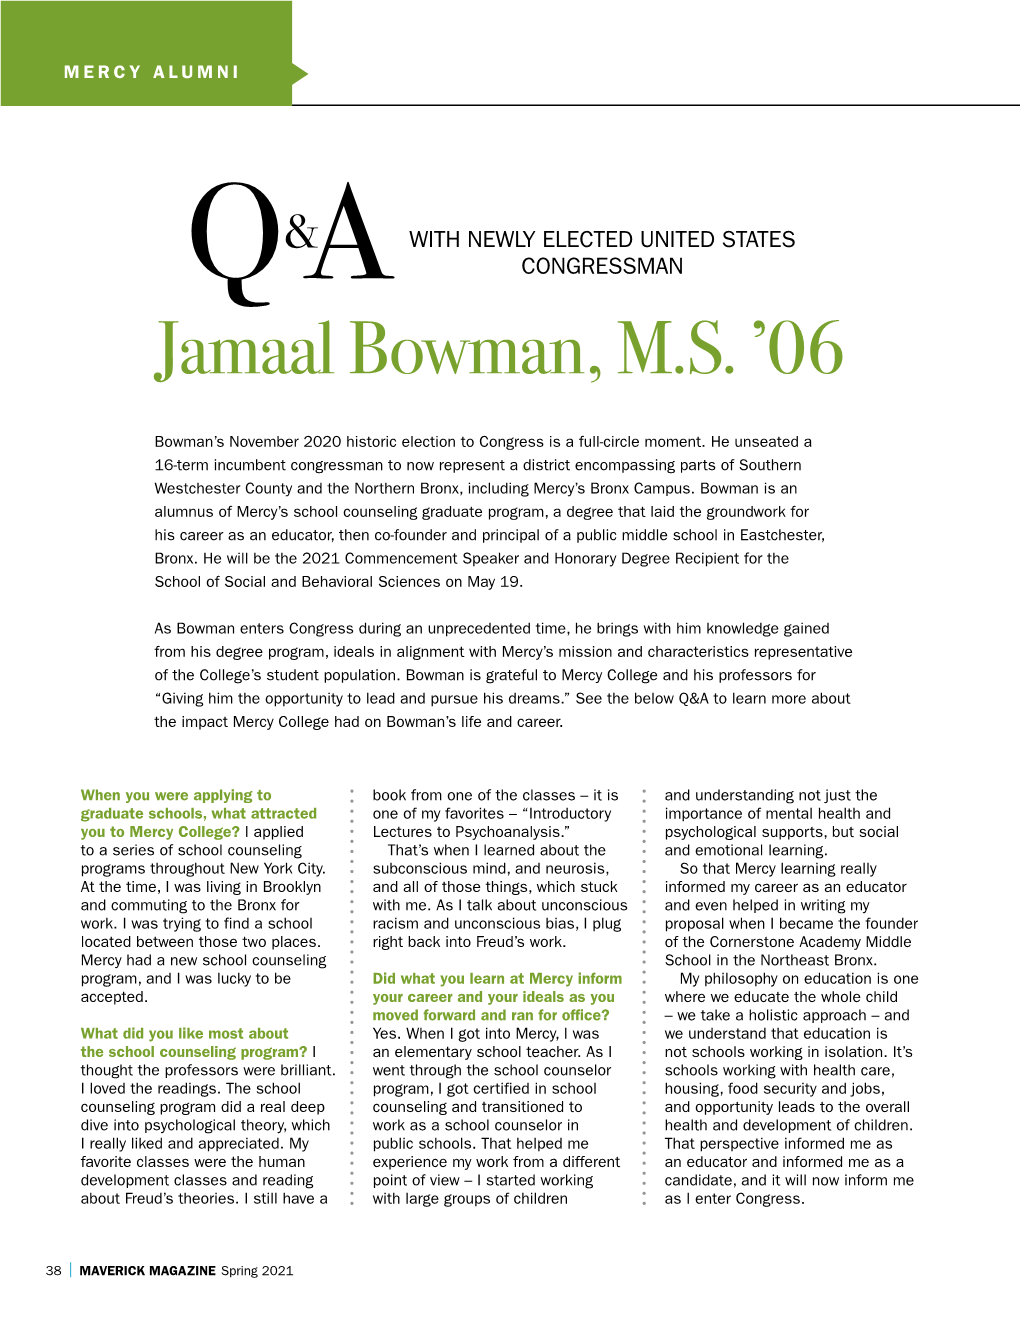 Jamaal Bowman, M.S. ’06